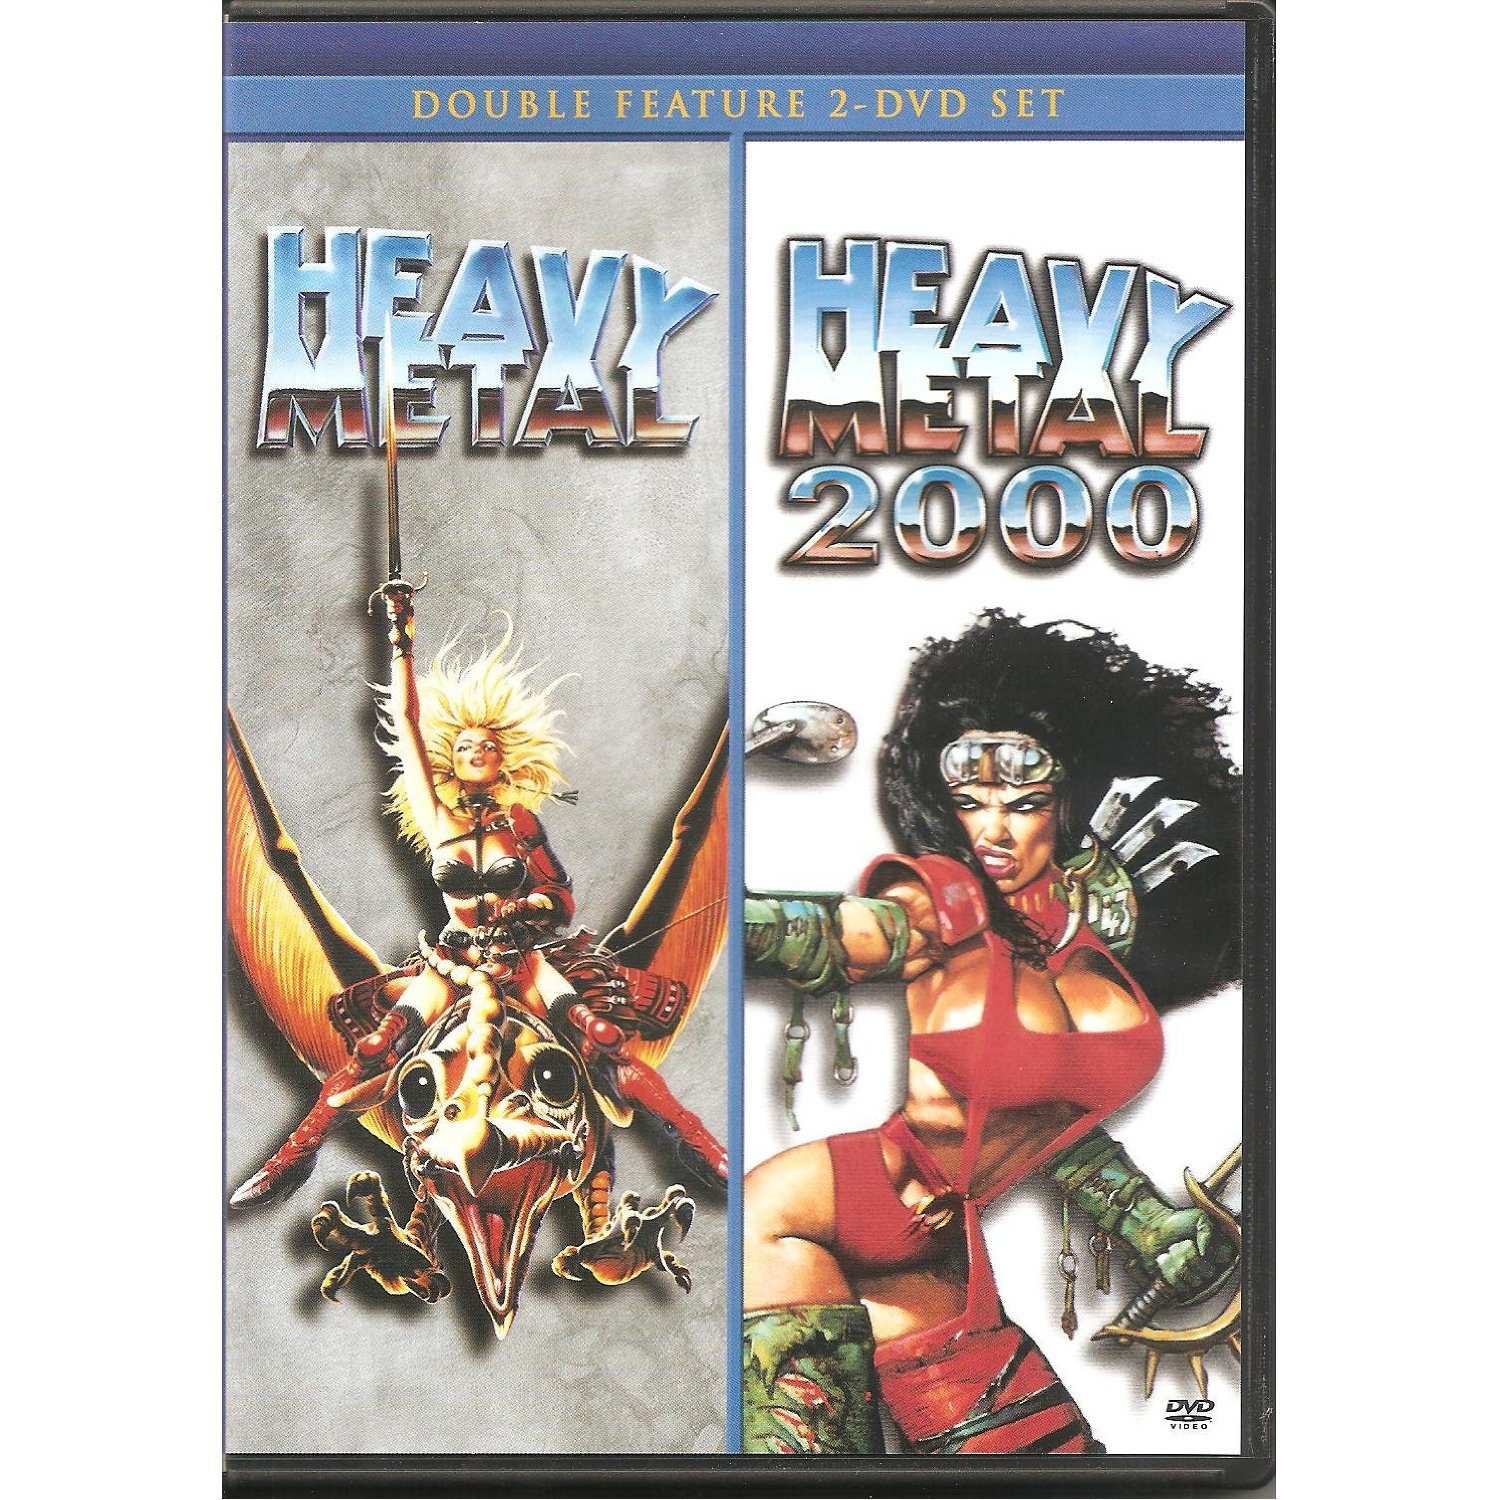 Heavy Metal & Heavy Metal 2000